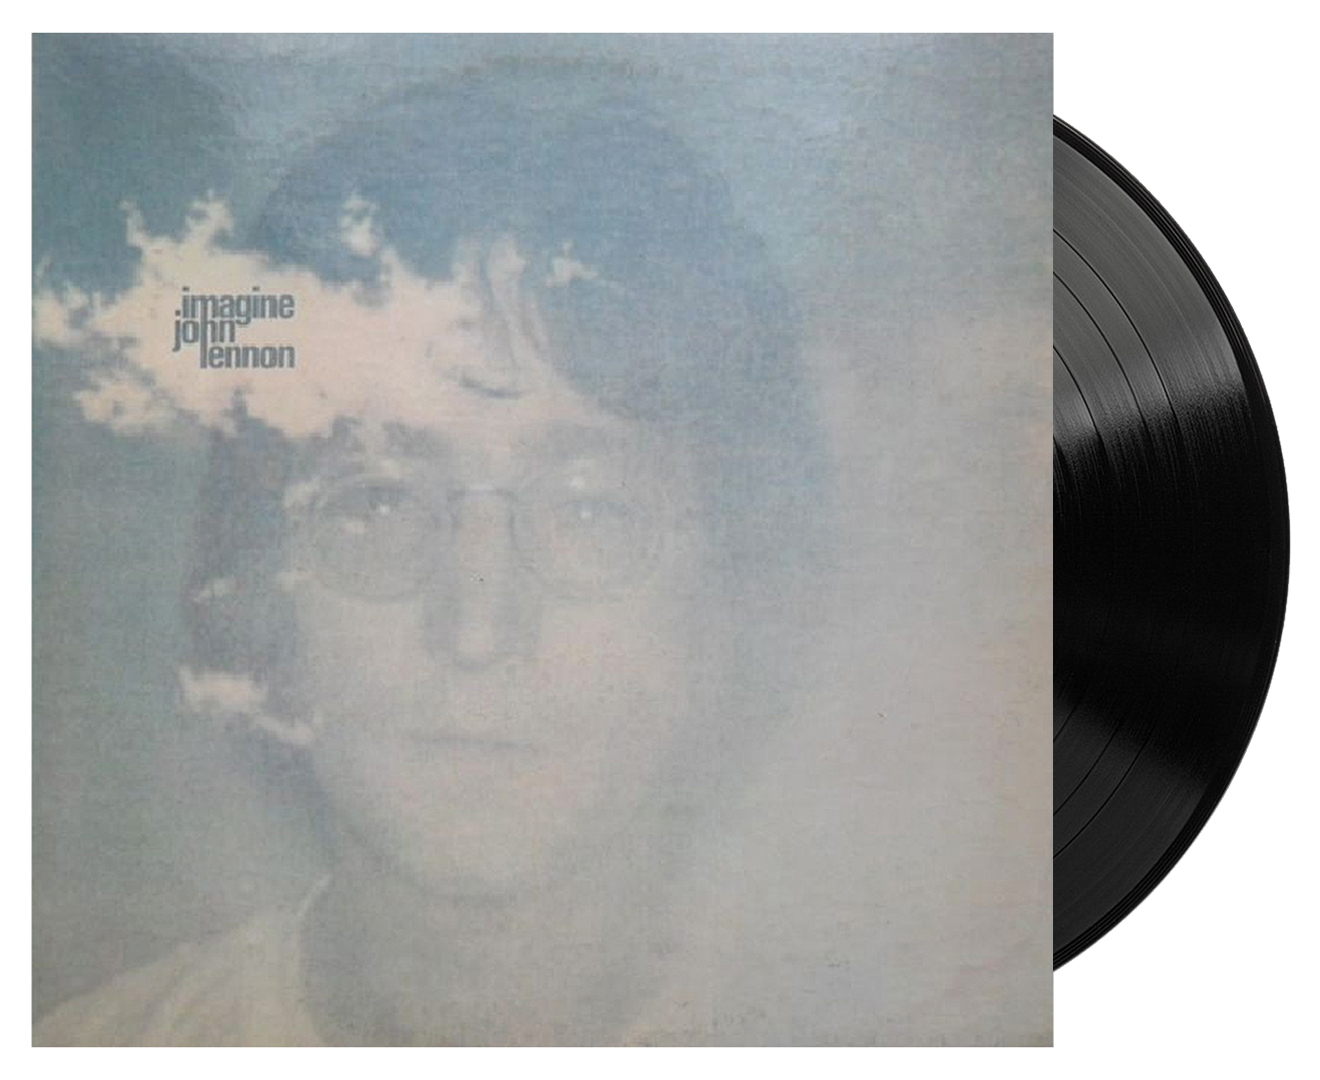 Леннон песня imagine. Джон Леннон имейджин. Imagine 1971. Imagine альбом Джона Леннона. John Lennon пластинка.